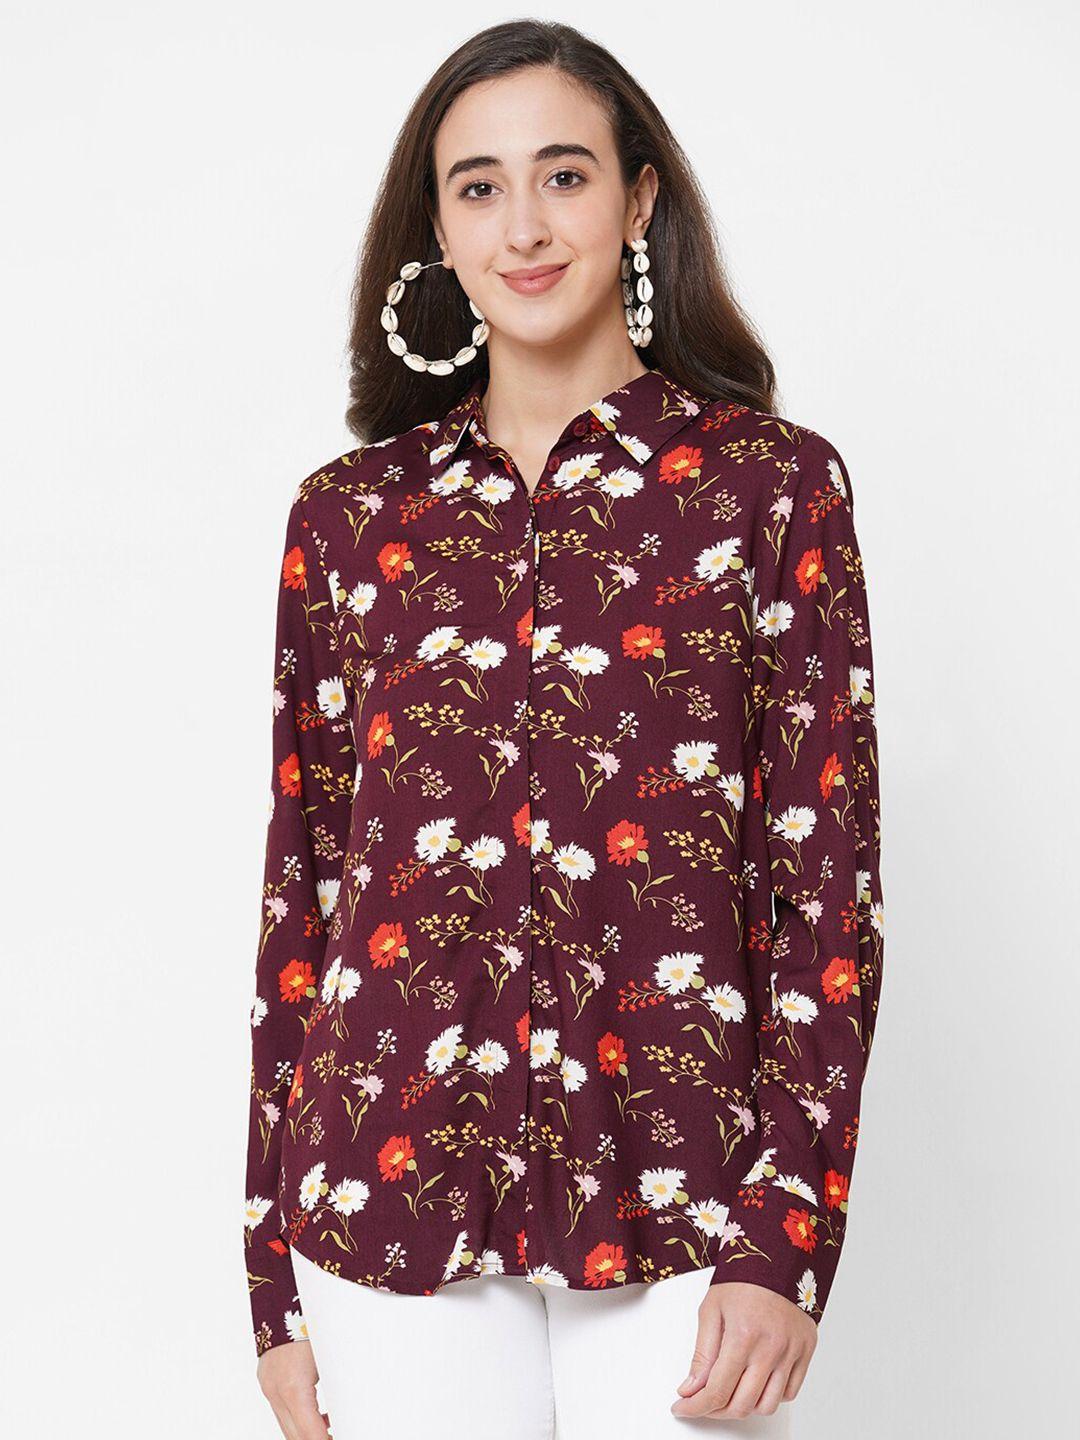 papa brands women maroon floral printed casual shirt